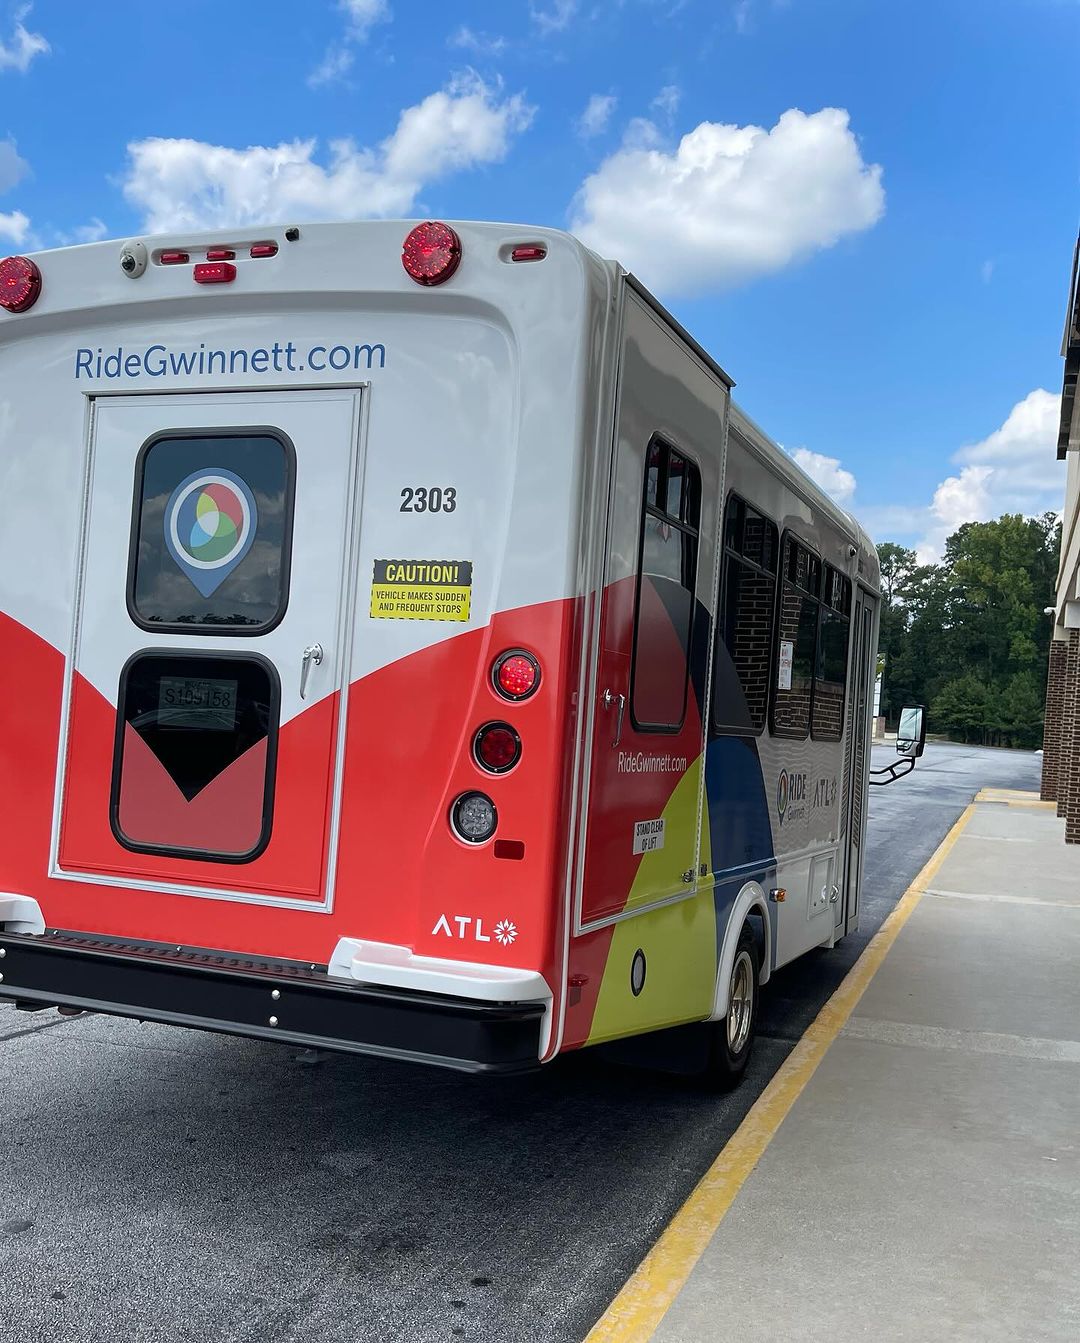 Gwinnett County's Ride Gwinnett transit service microtransit van pulls off after alighting passengers at a local store.